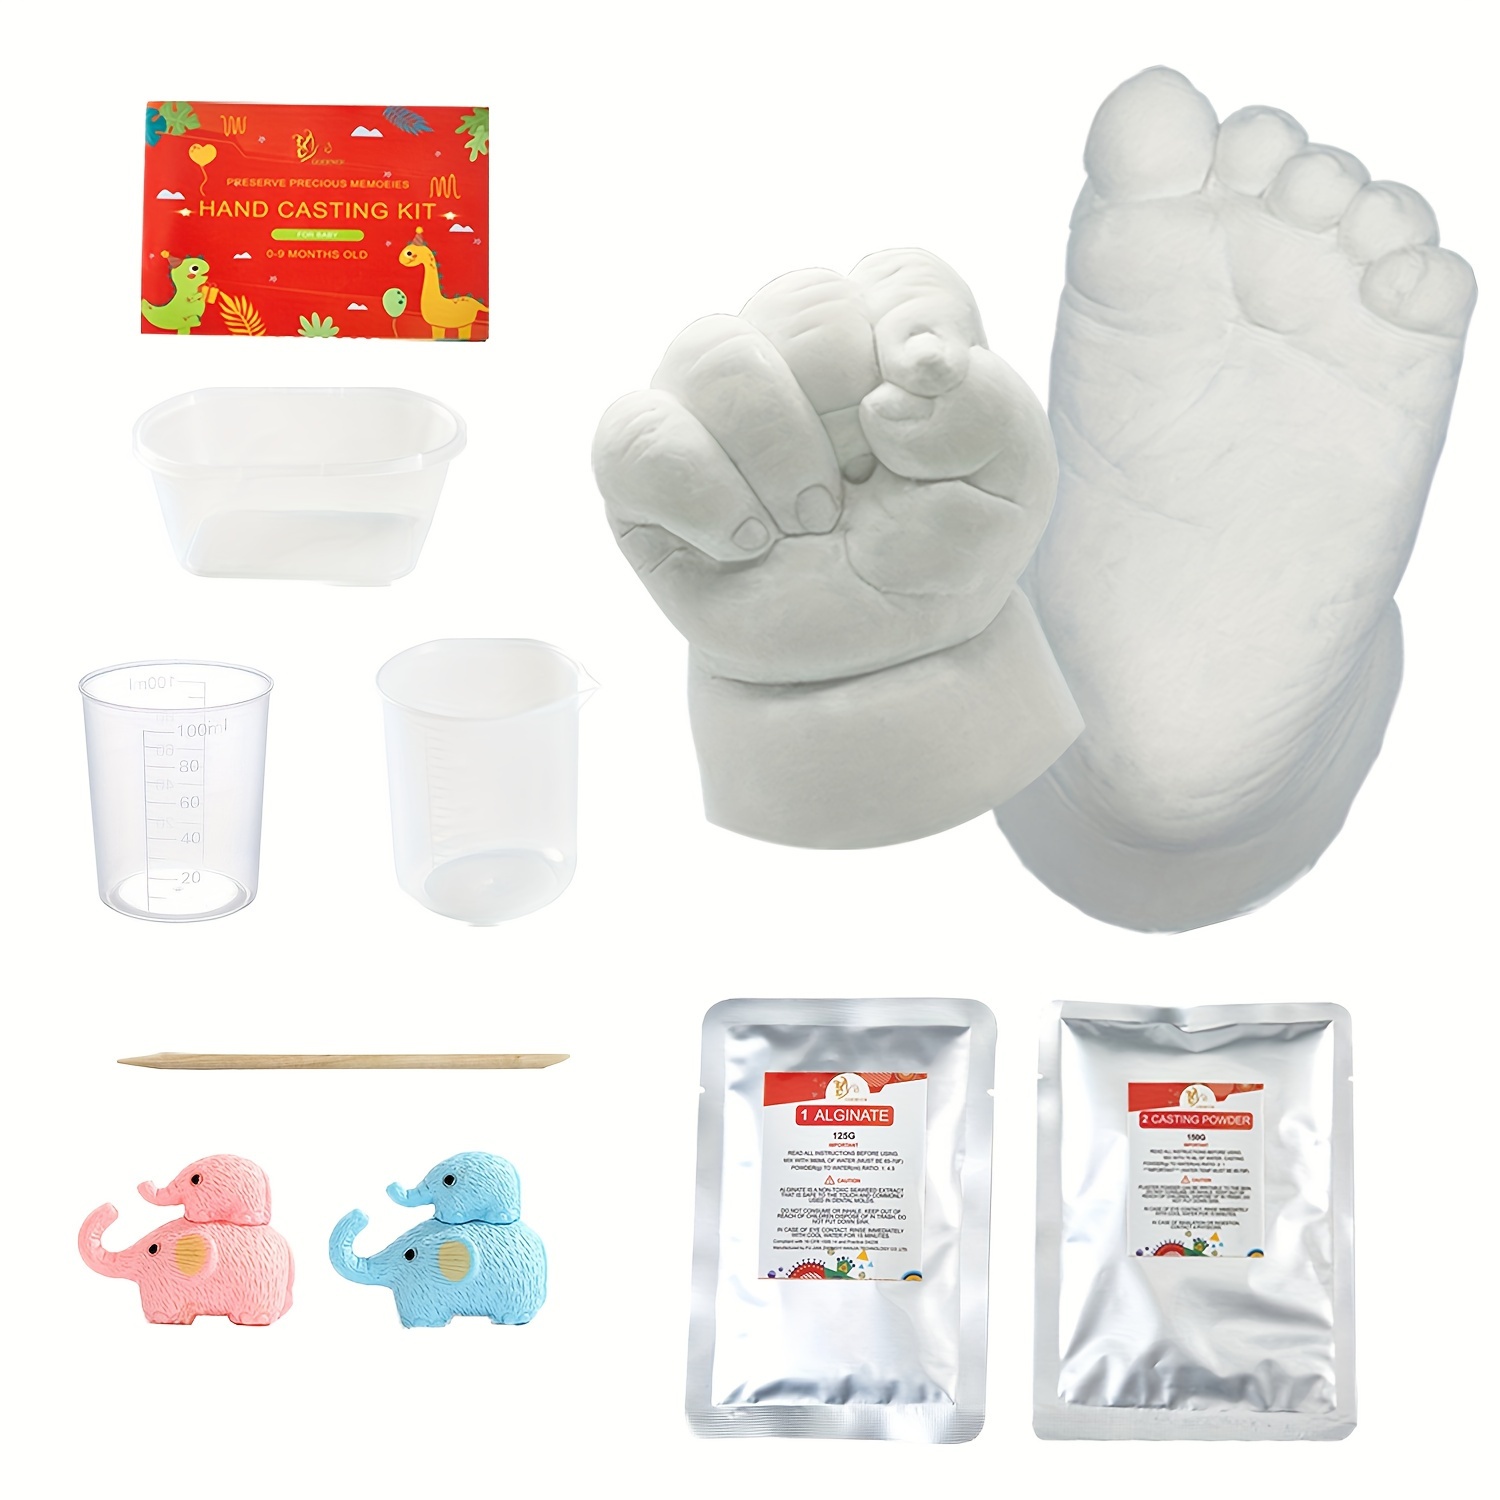 Hand Casting Kit Couples & Keepsake Hand Mold kit Couples for